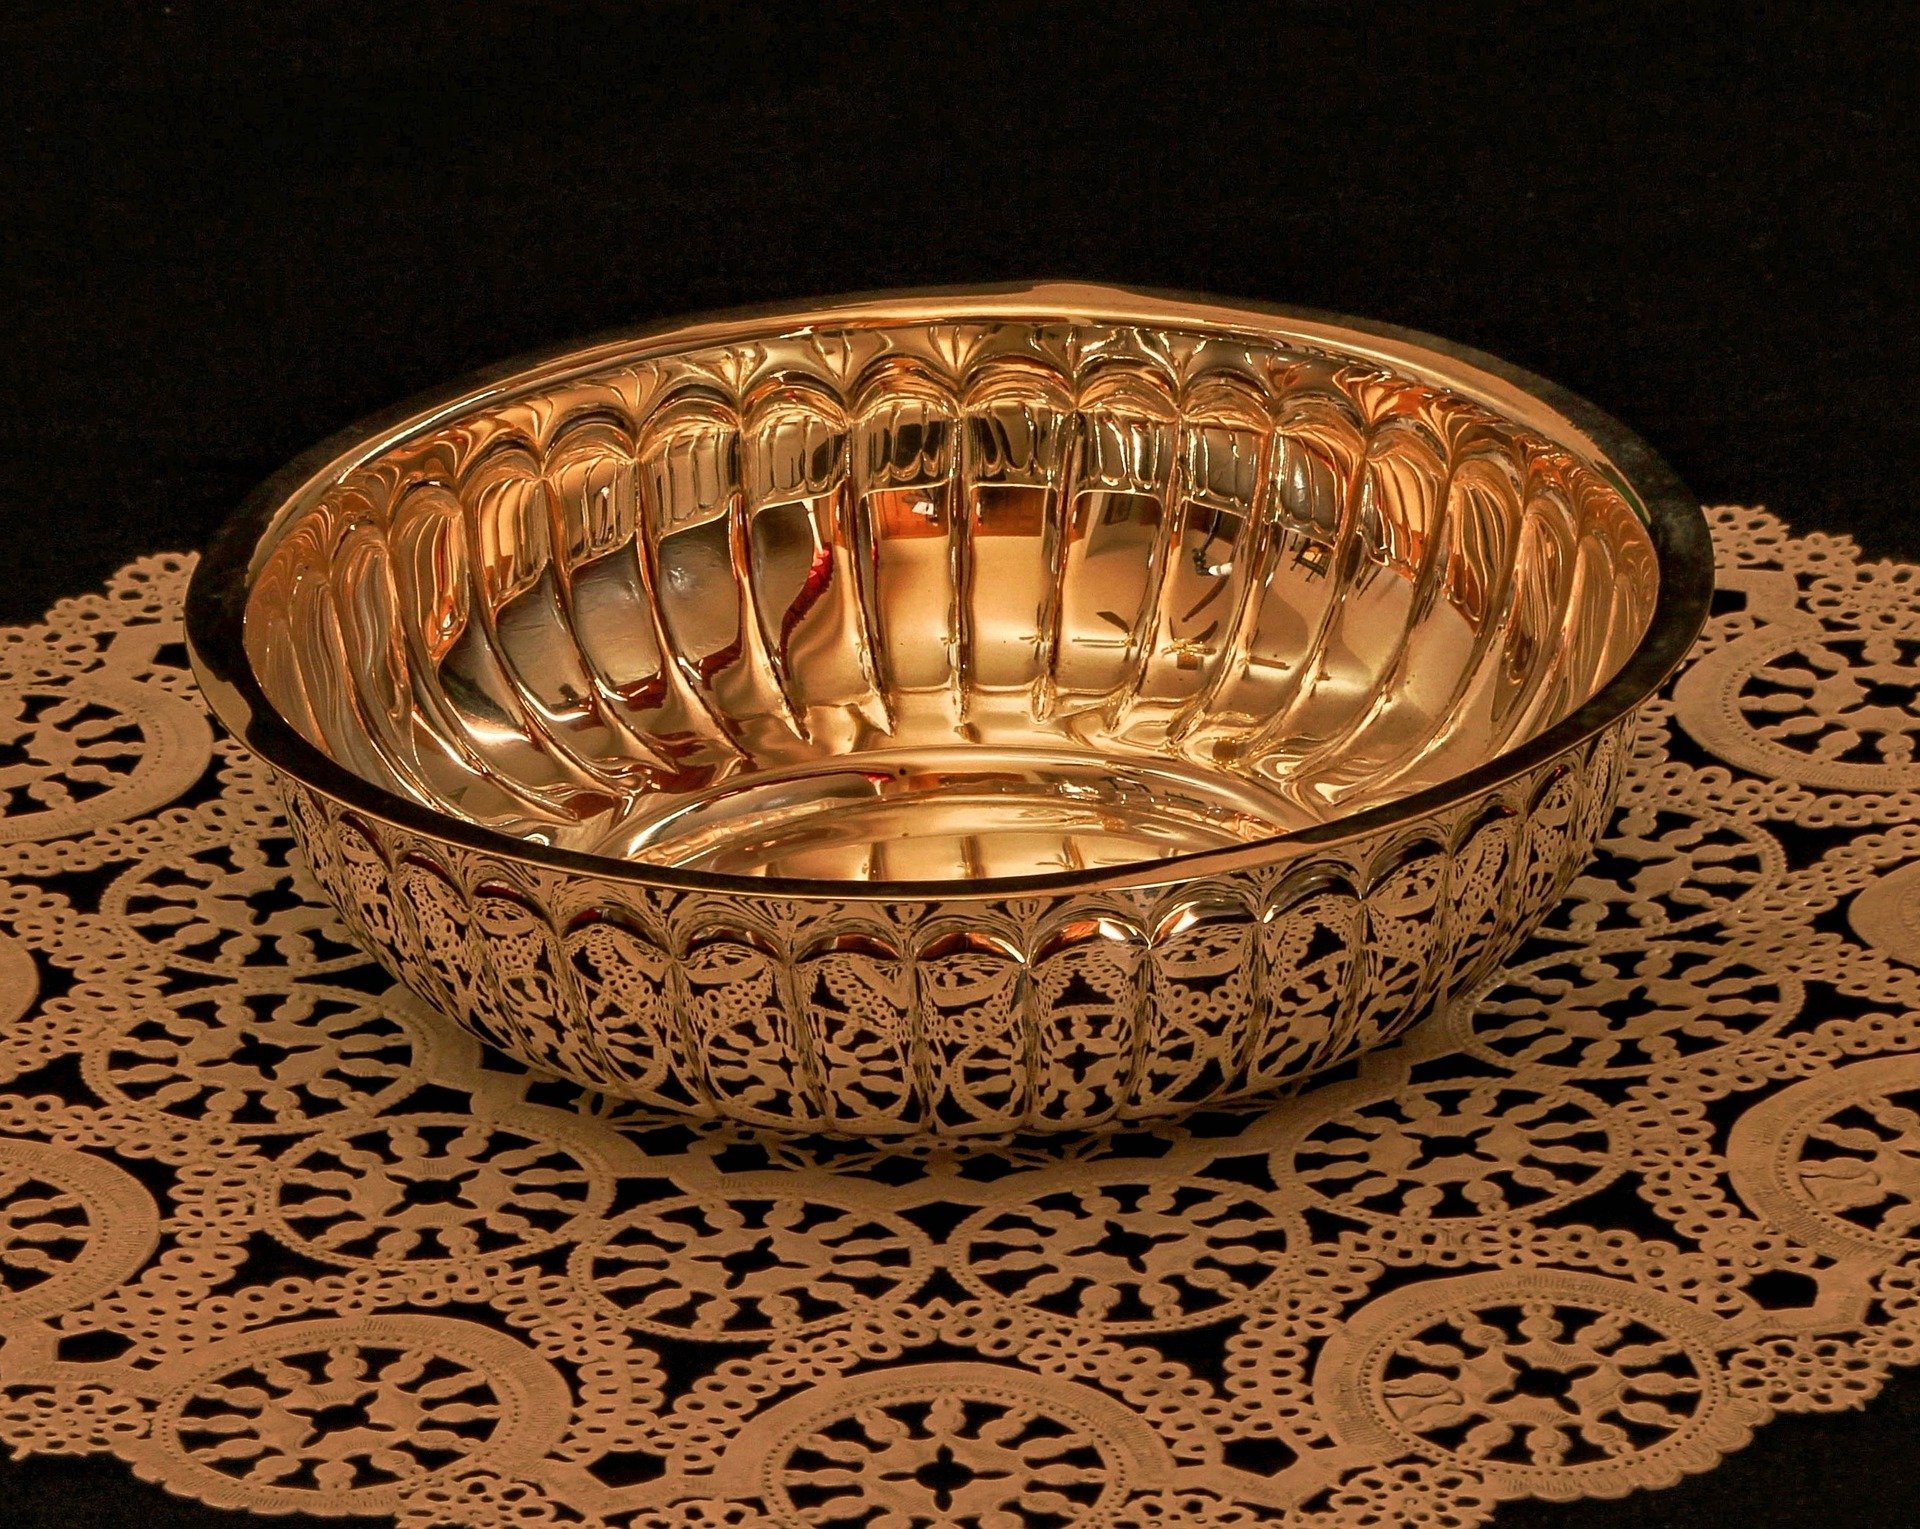 bowl-85003_1920.jpg